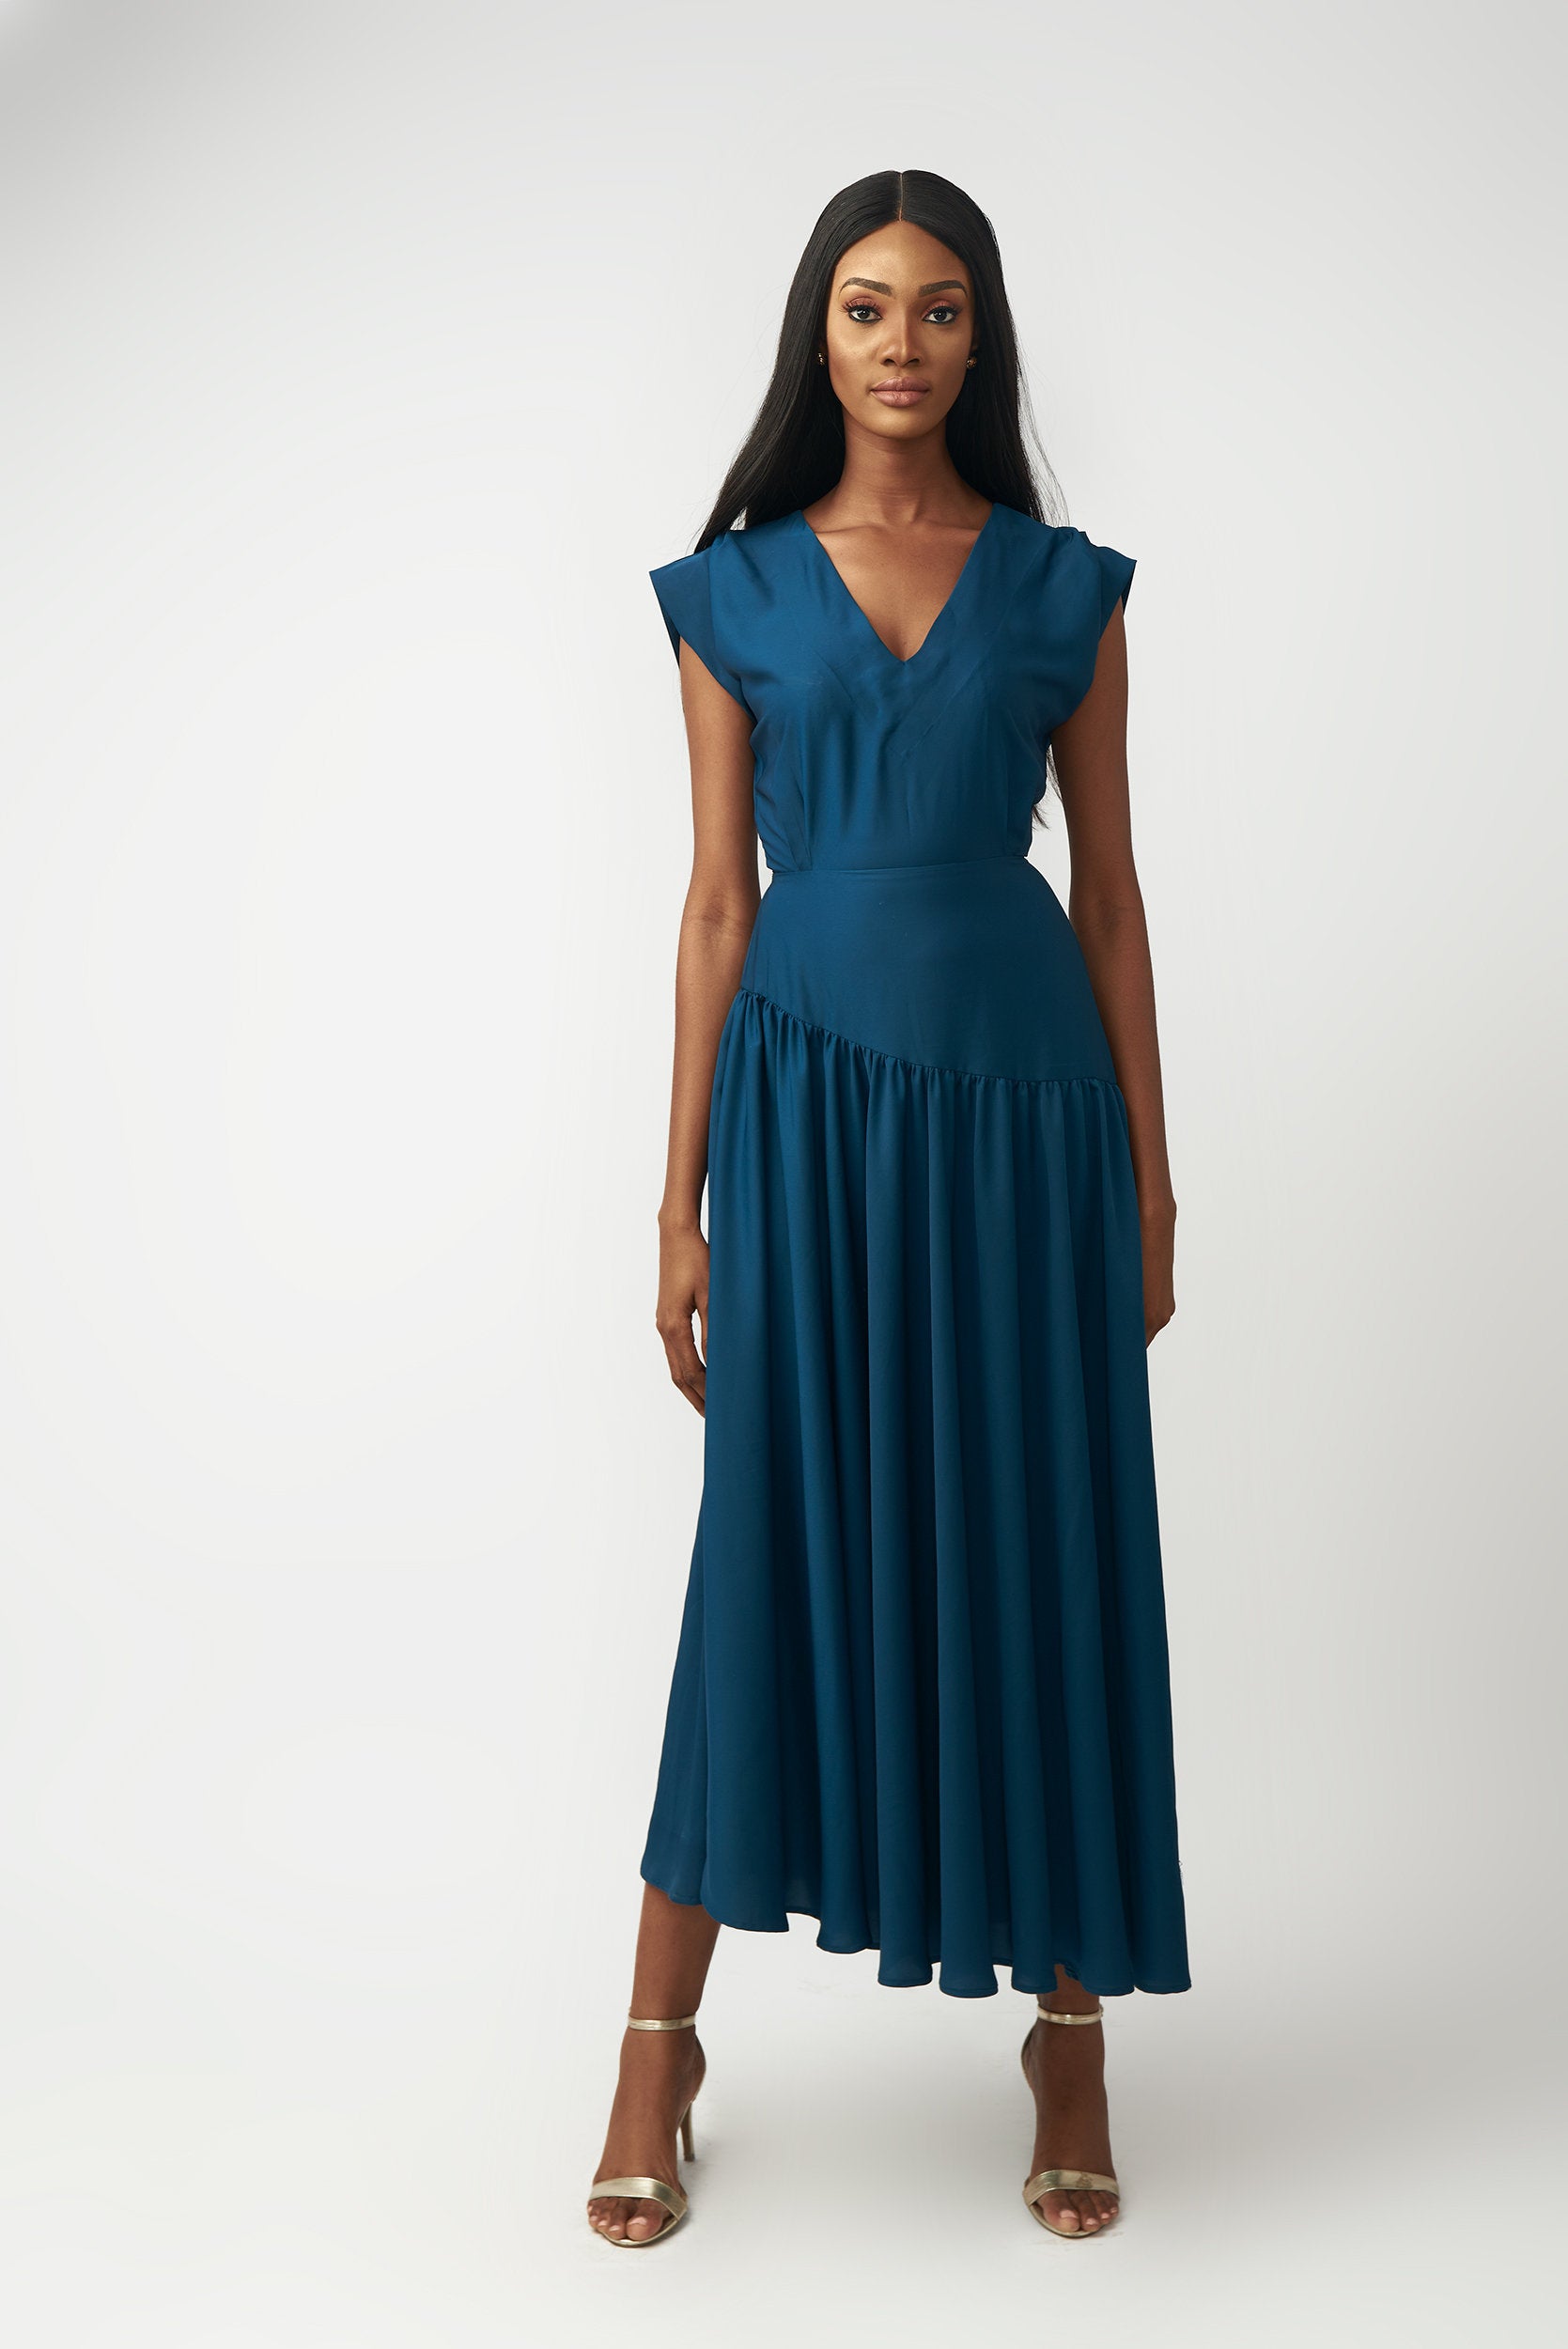 The Plain Amira Dress